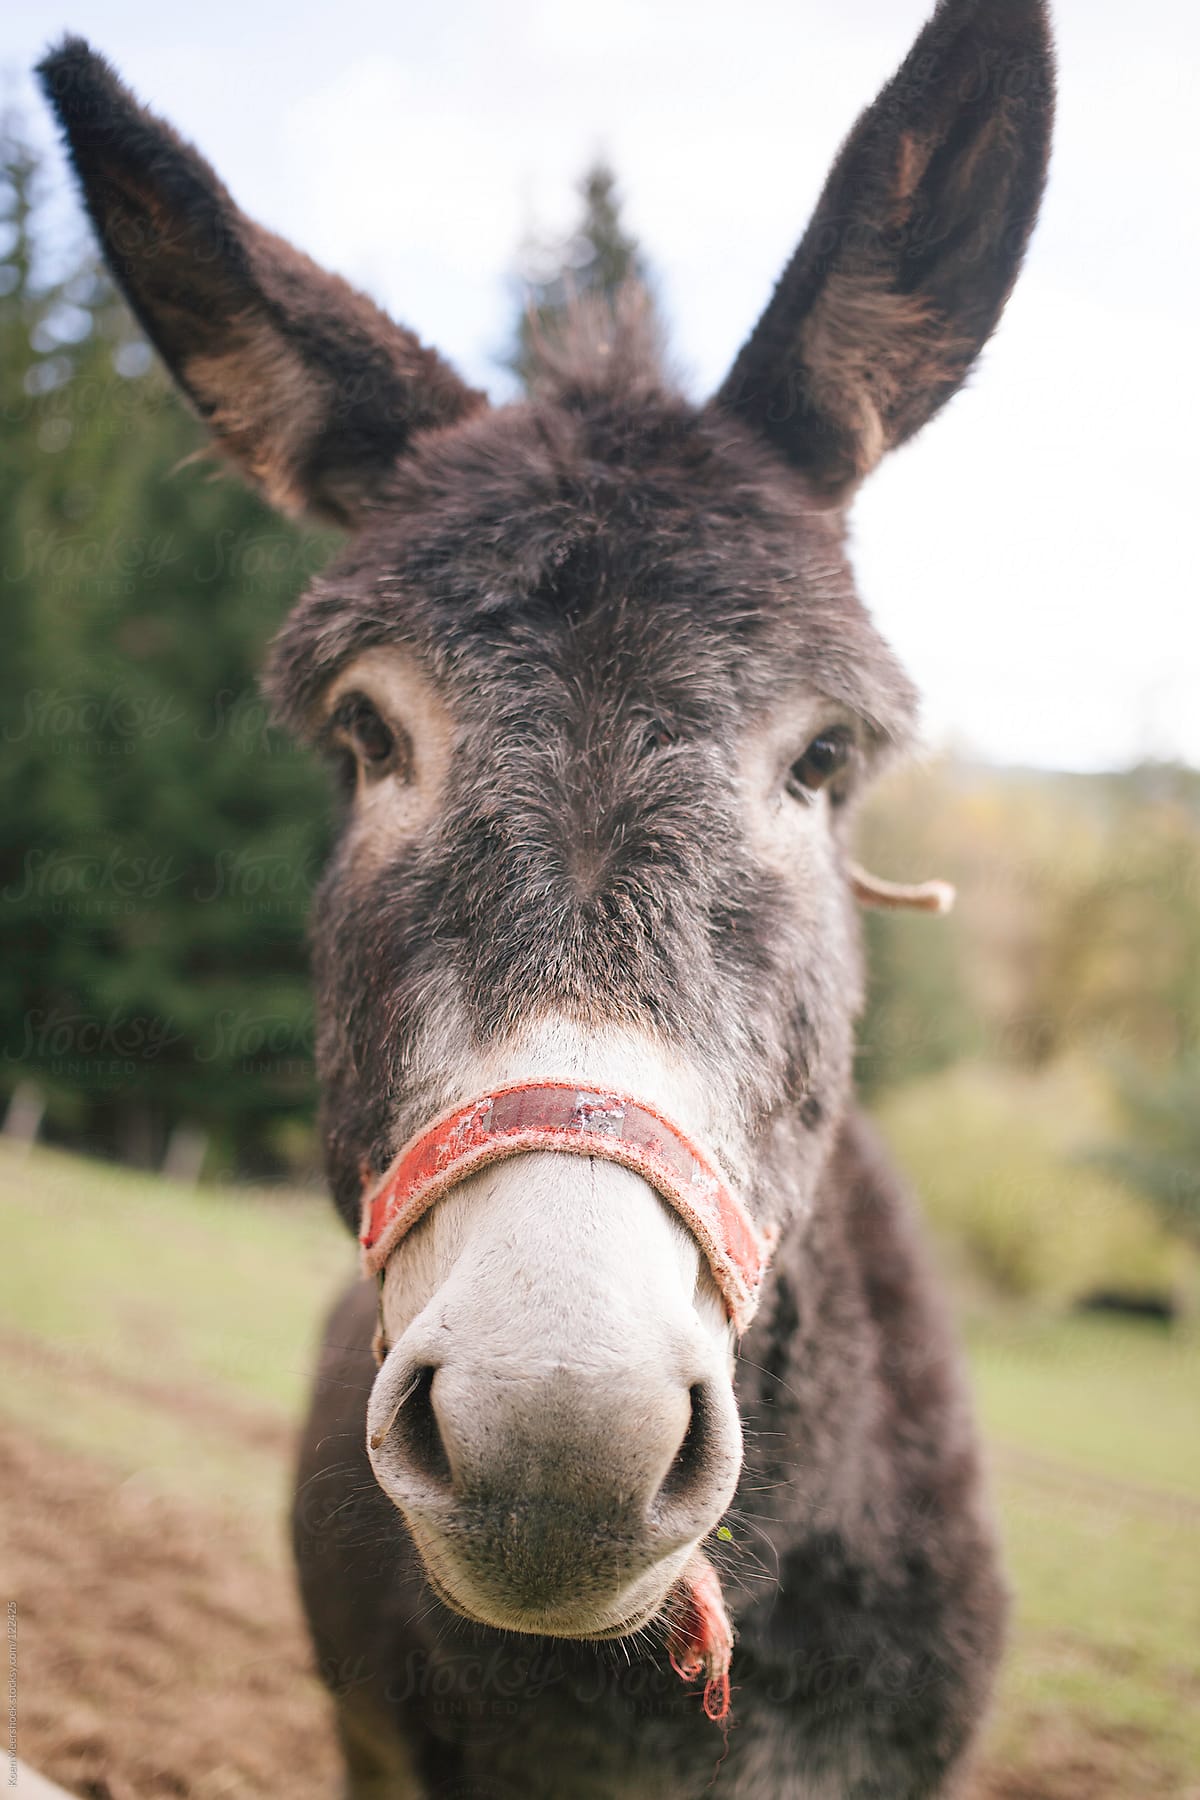 Portrait of a donkey.